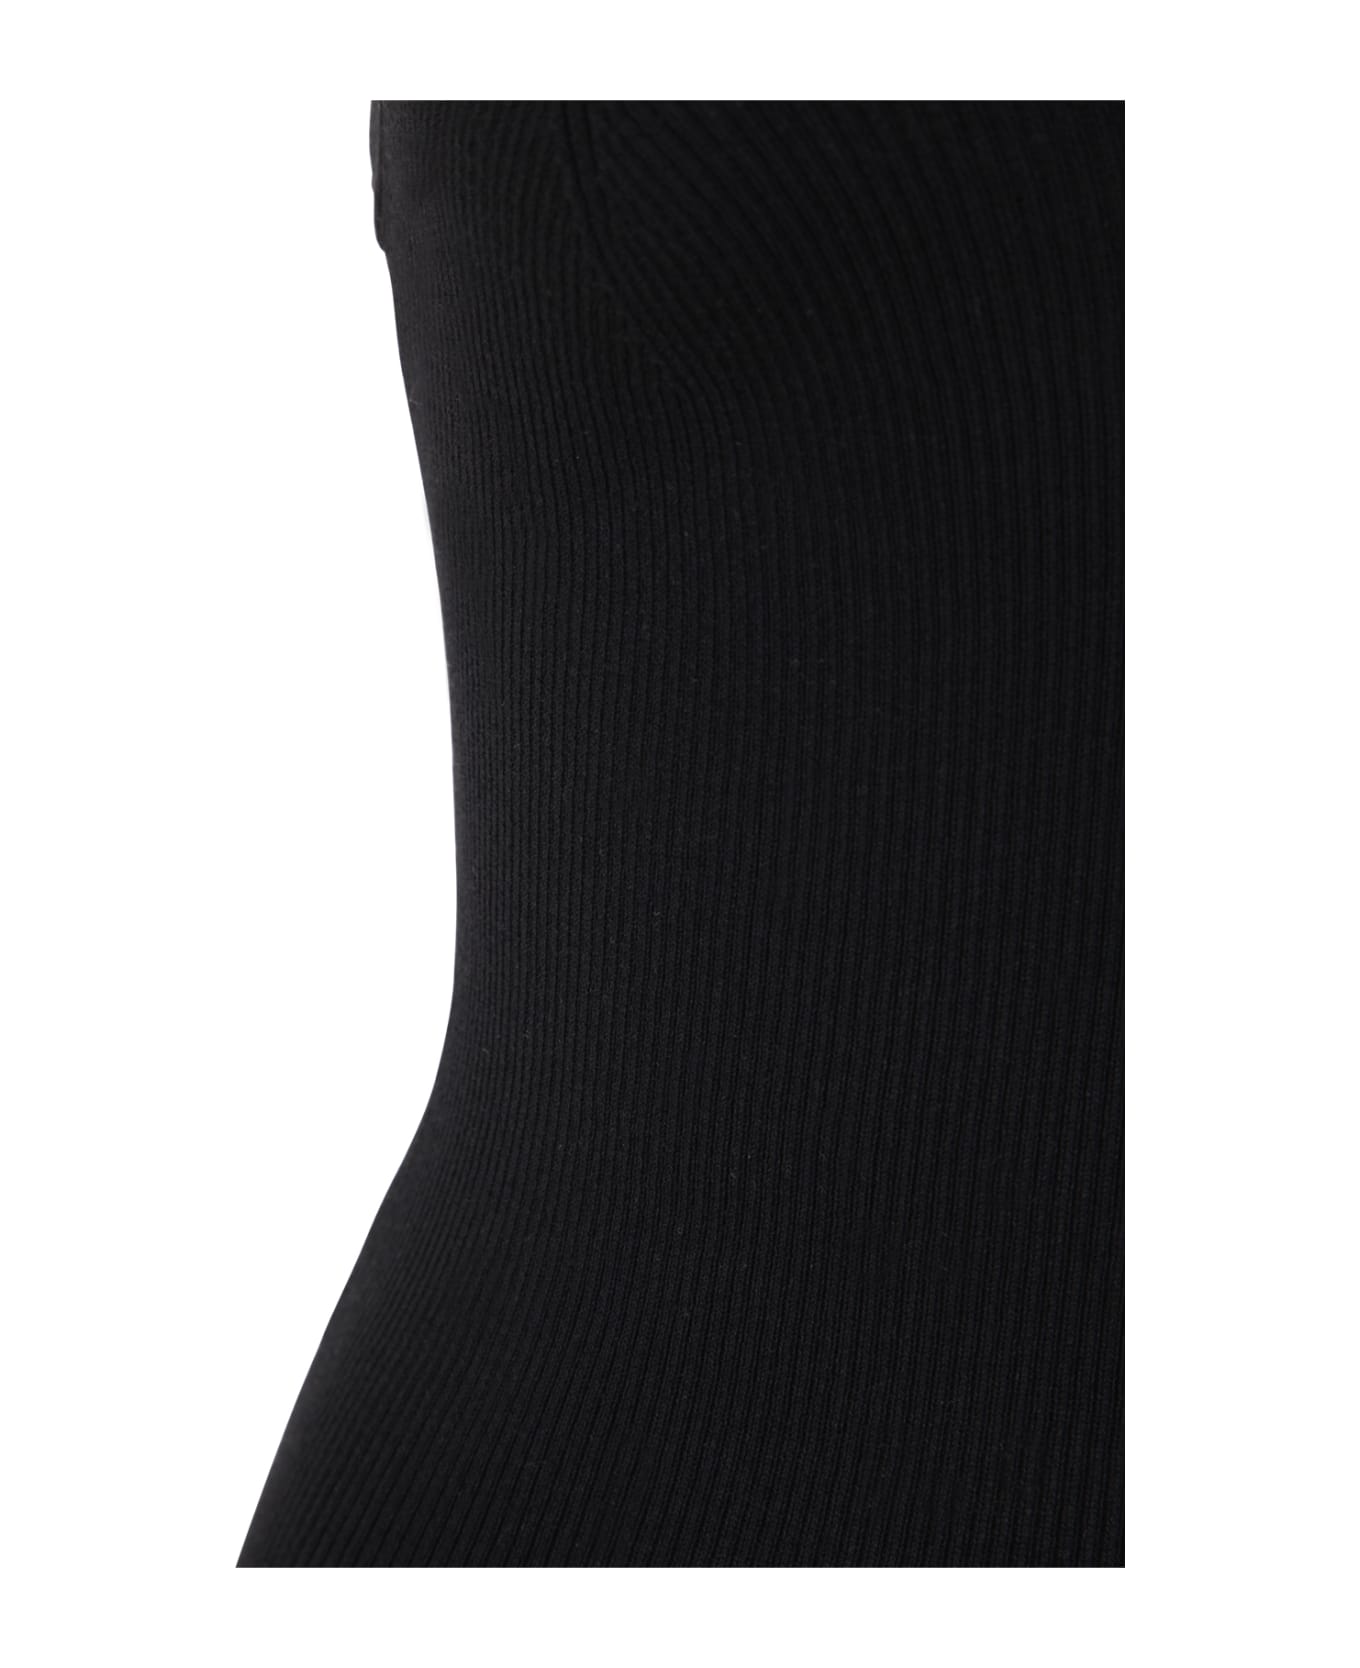 Parosh 2x2 Rib Knit And Sleeveless Shirt - Black